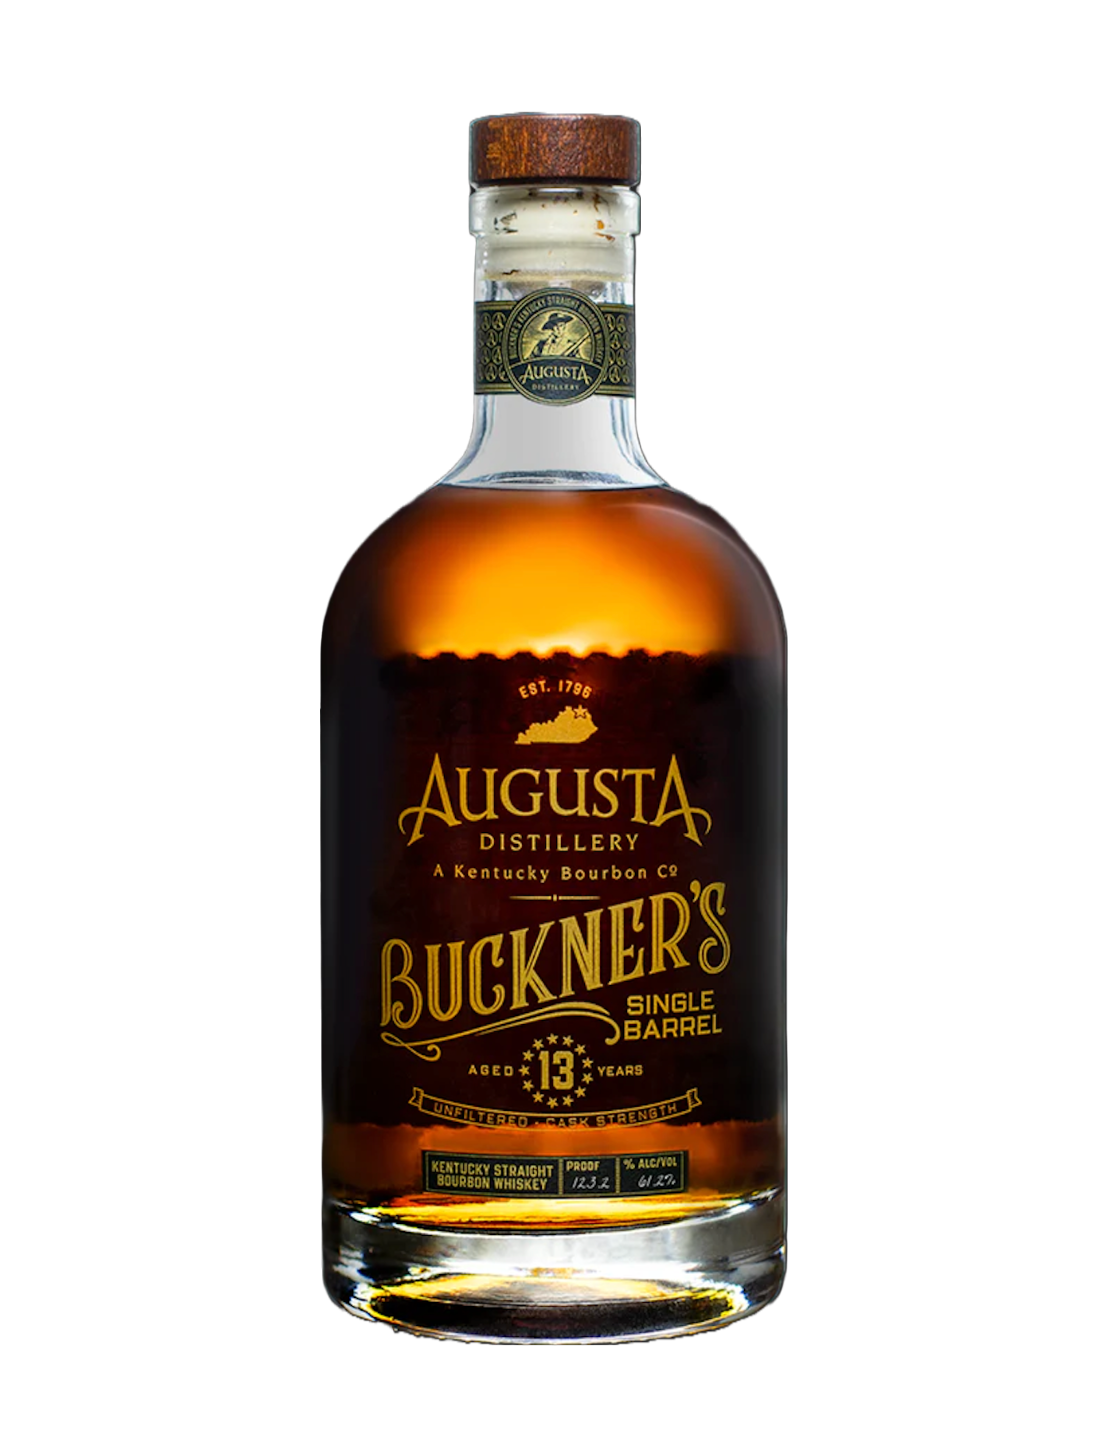 An elegant bottle of Augusta Distillery Buckner's 13 Year Single Barrel Bourbon in front of a plain white background